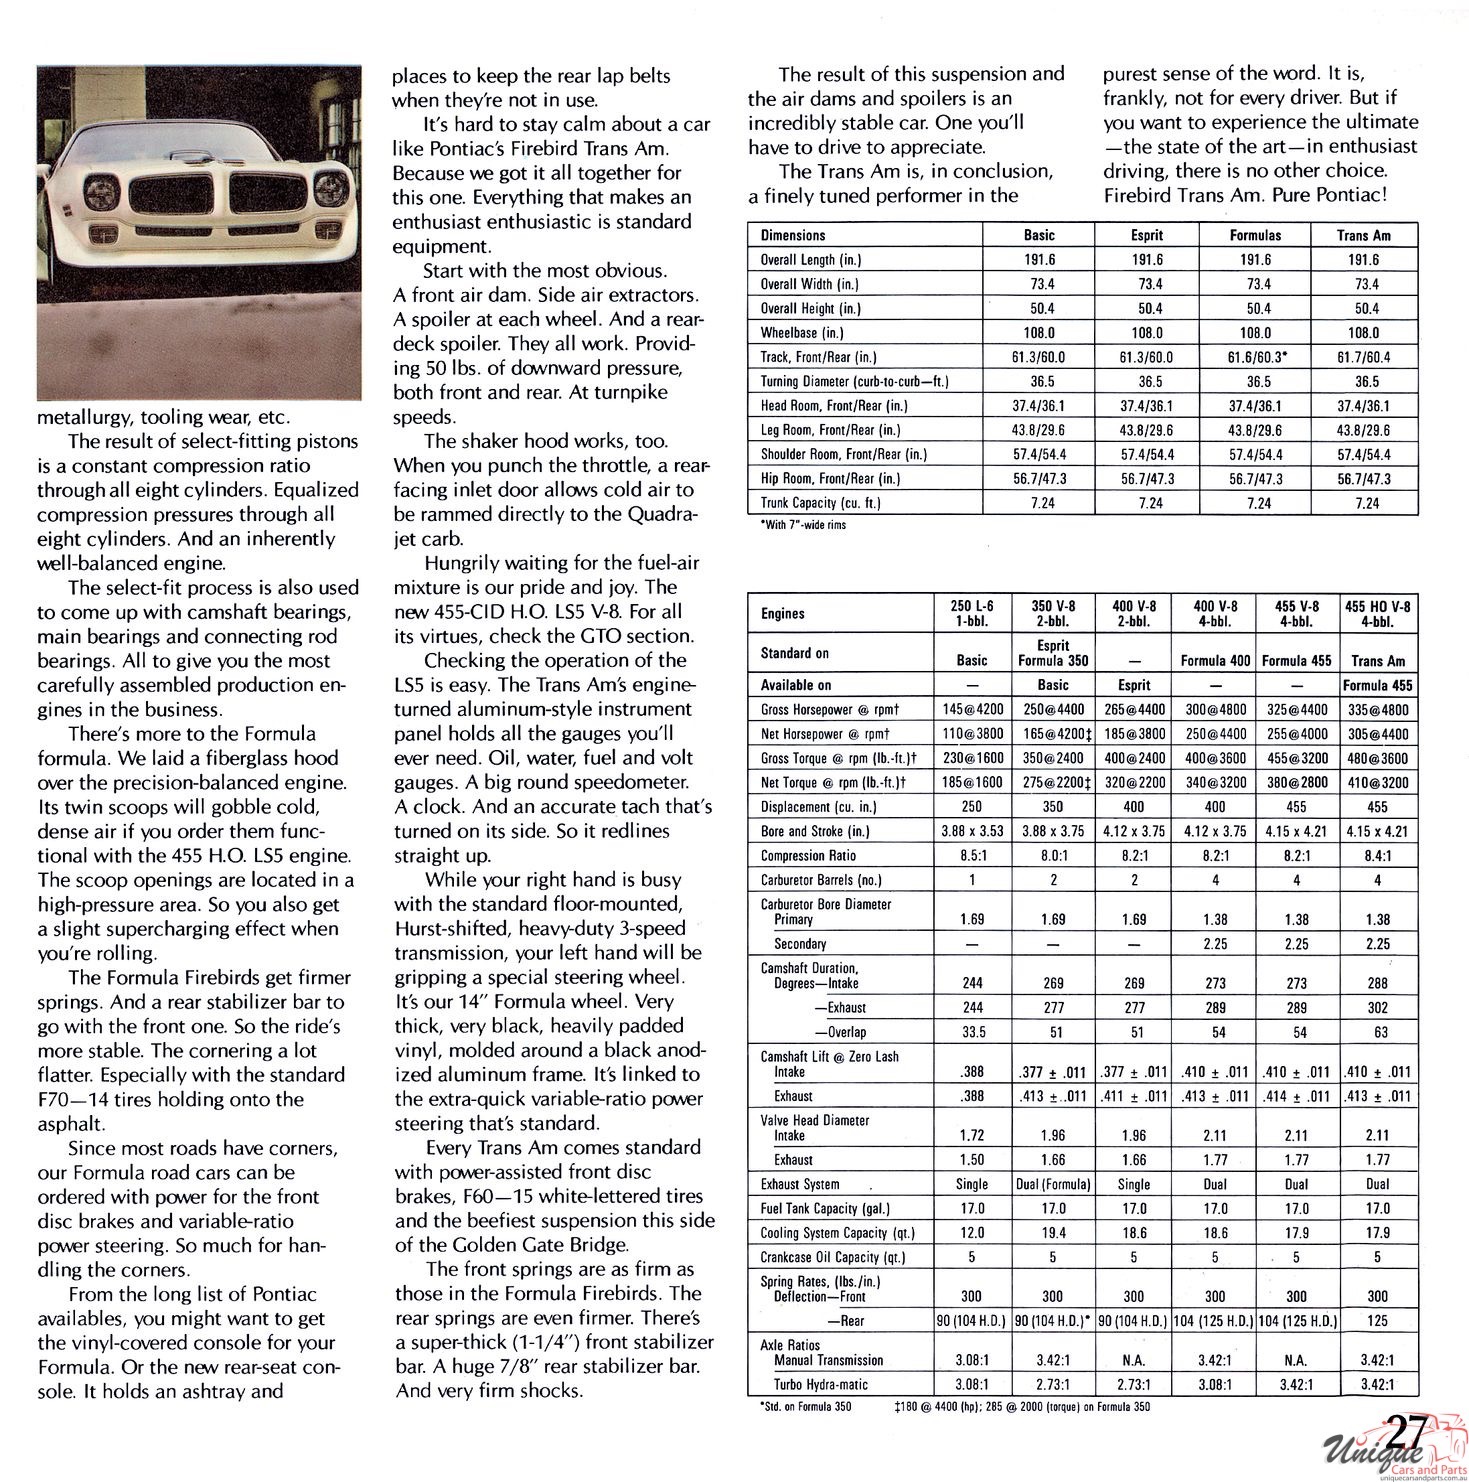 1971 Pontiac Performance Cars Brochure Page 2